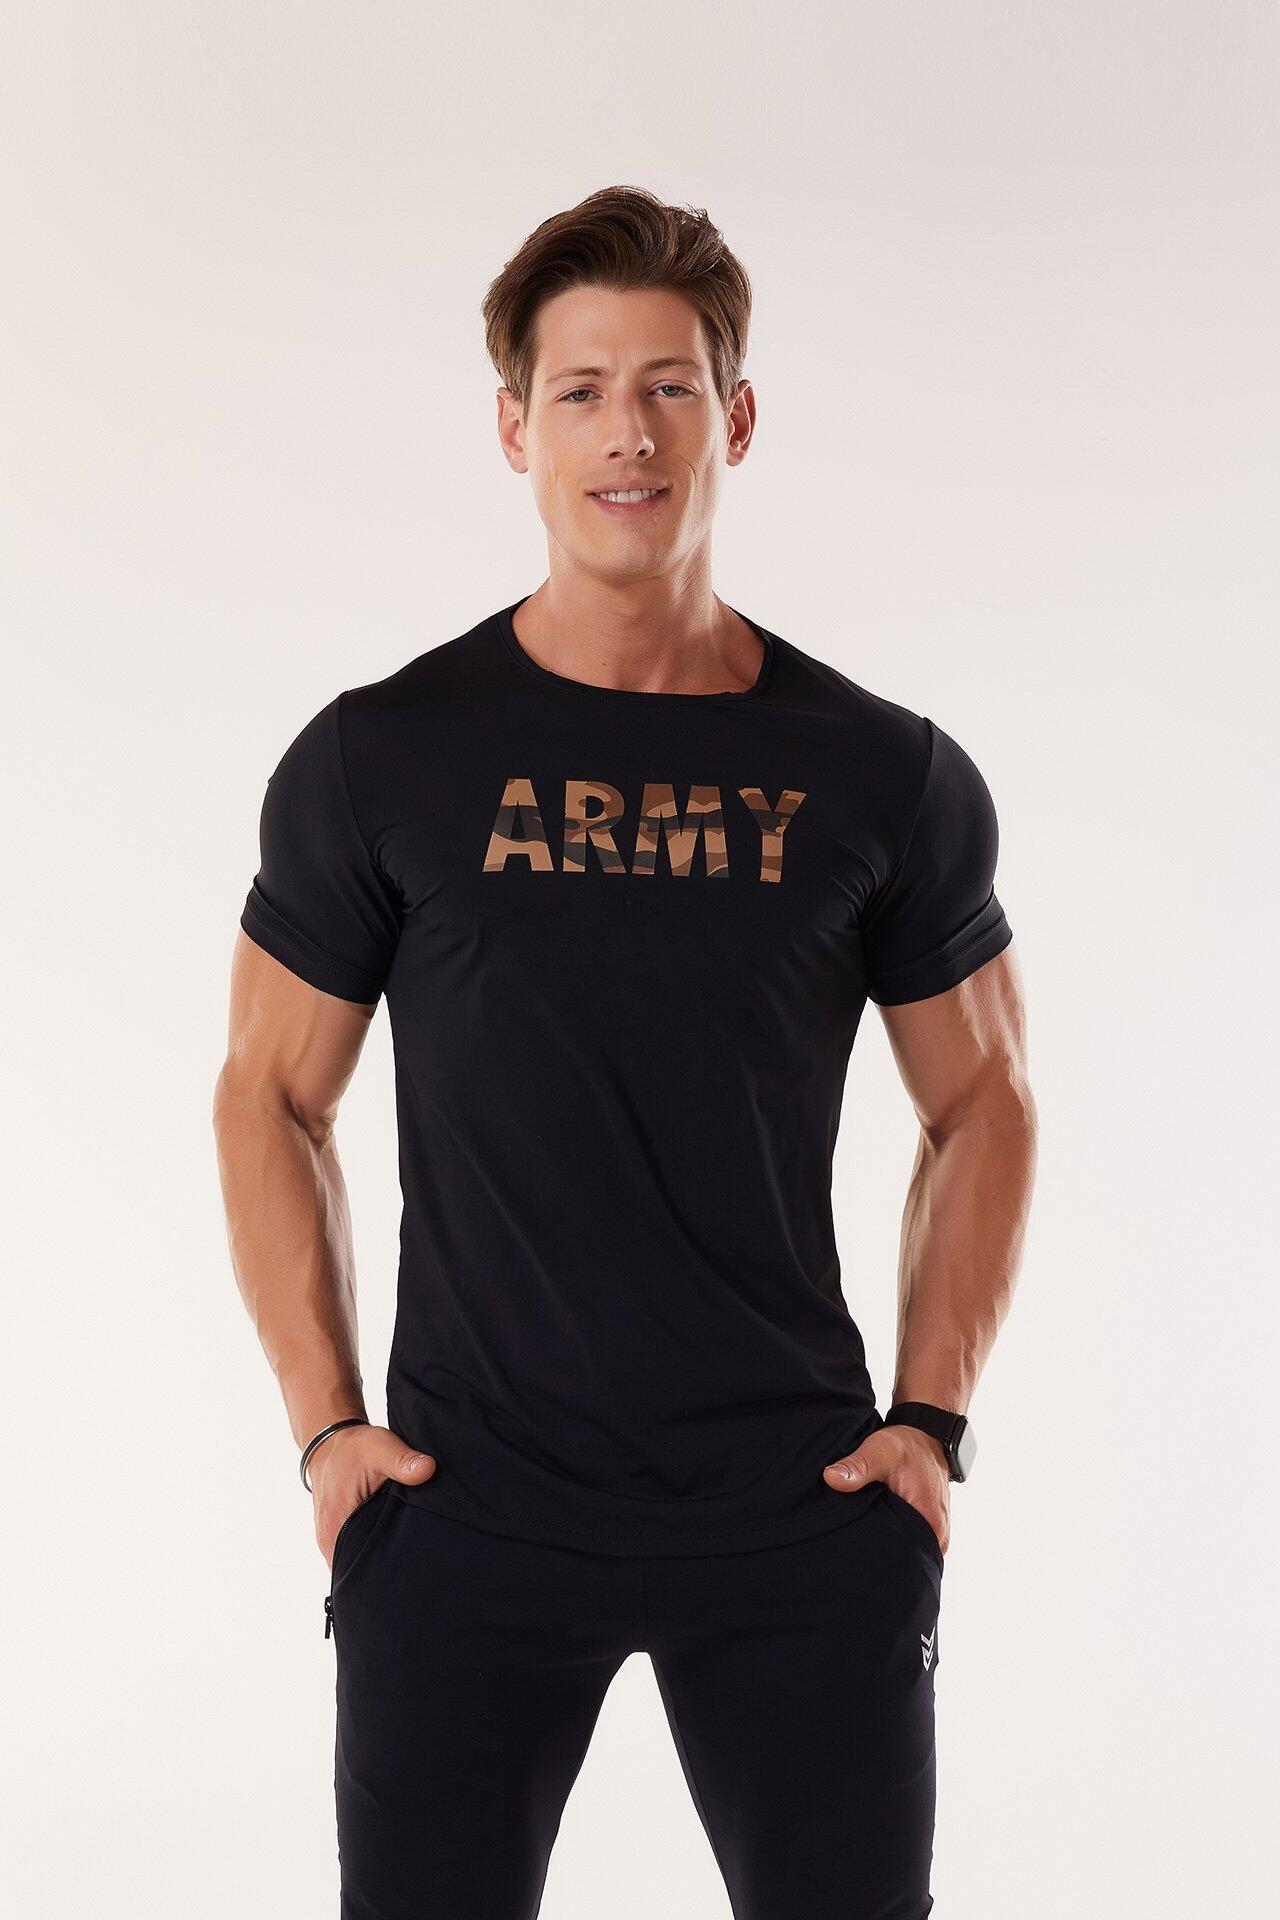 Comprar Camiseta Dry Fit Army Sand Limited Edition - ARMYBR